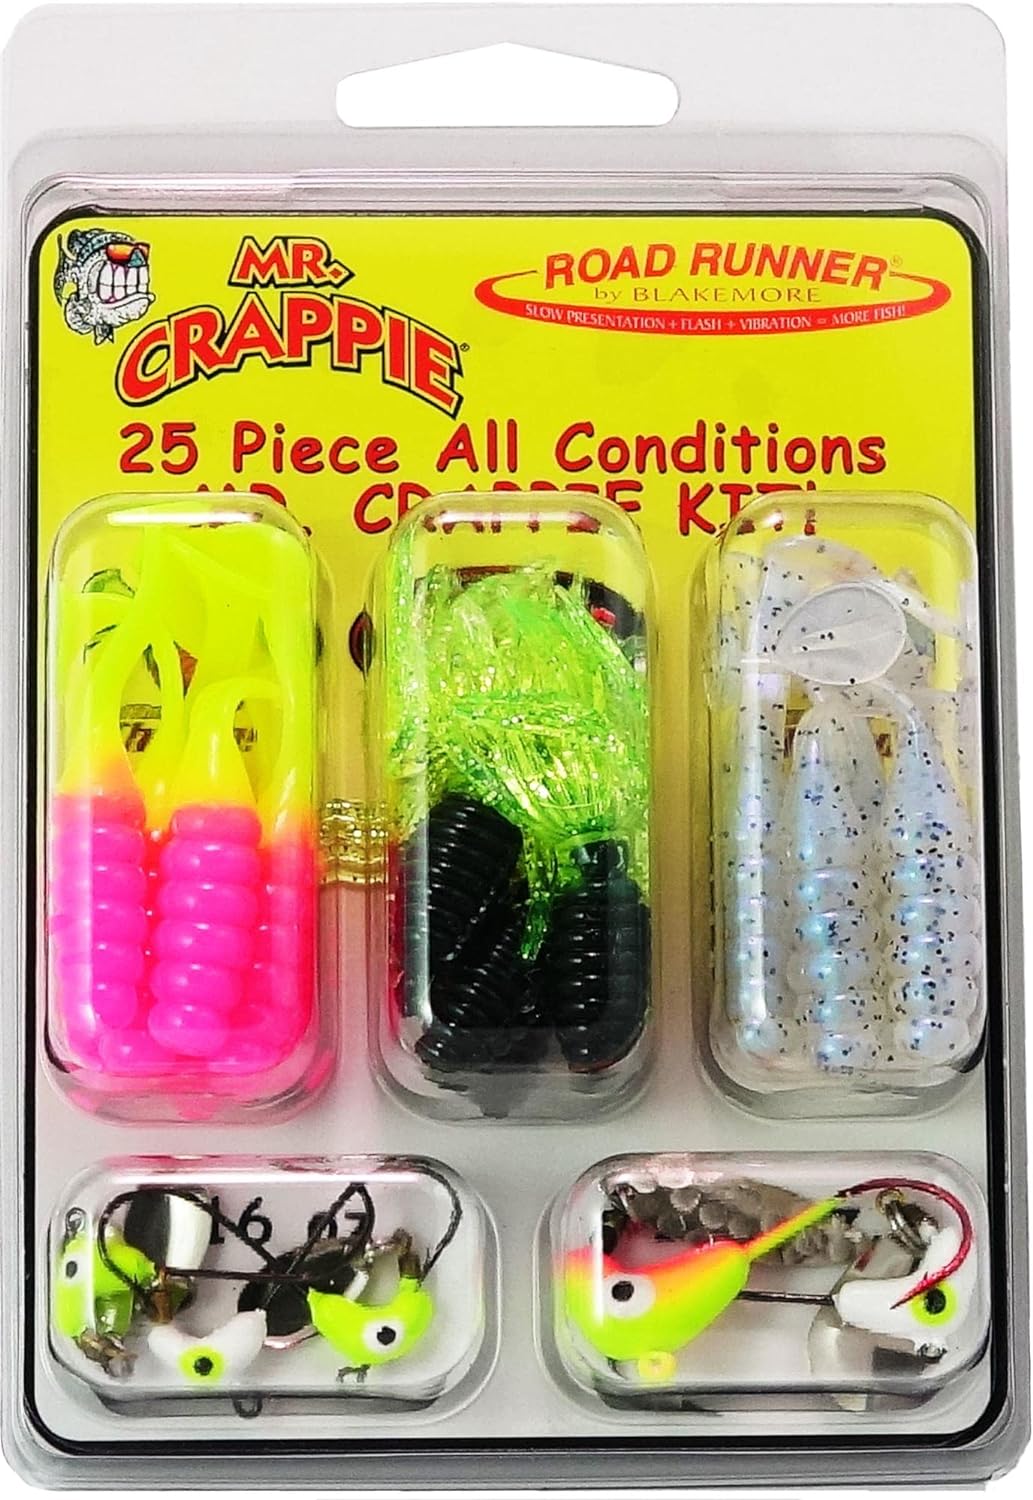 Road Runner Mr. Crappie 25 Piece Kit